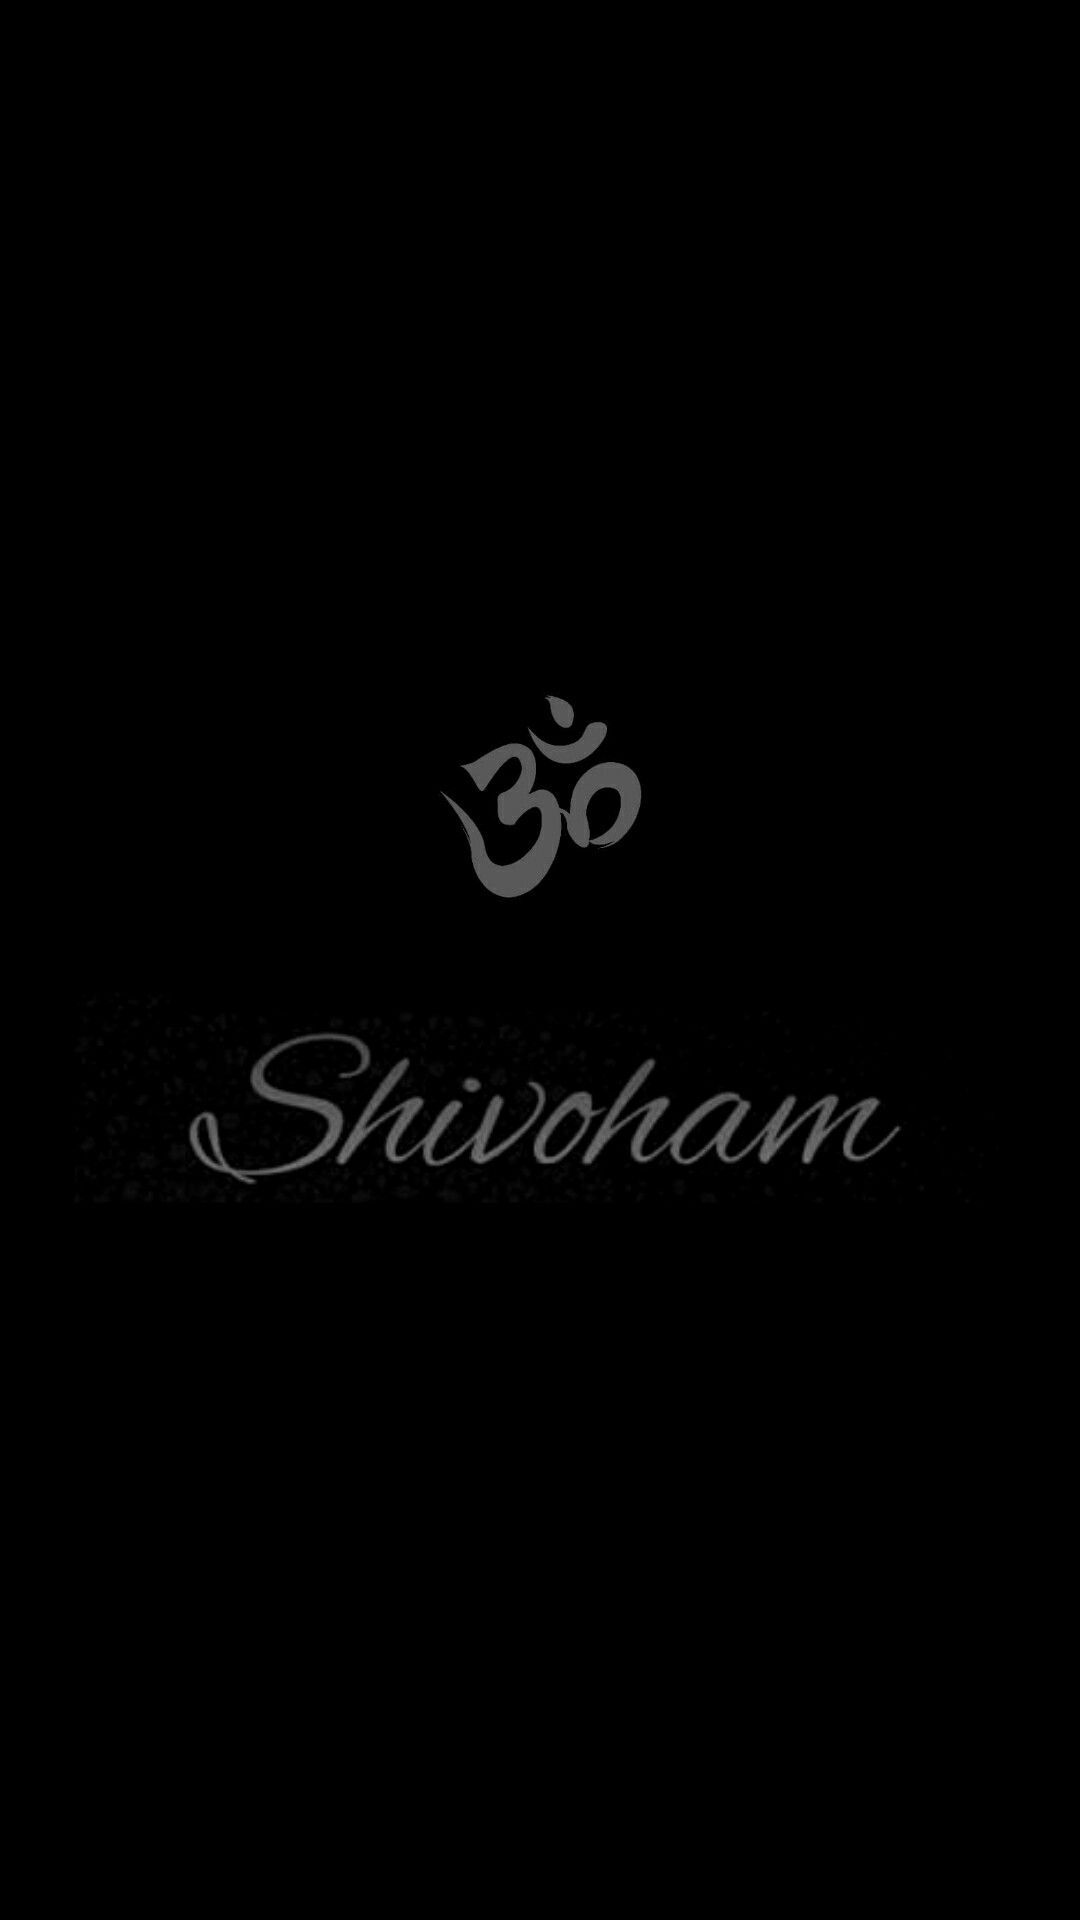 Om Shivoham. Rudra shiva, Lord murugan, Shiva lord